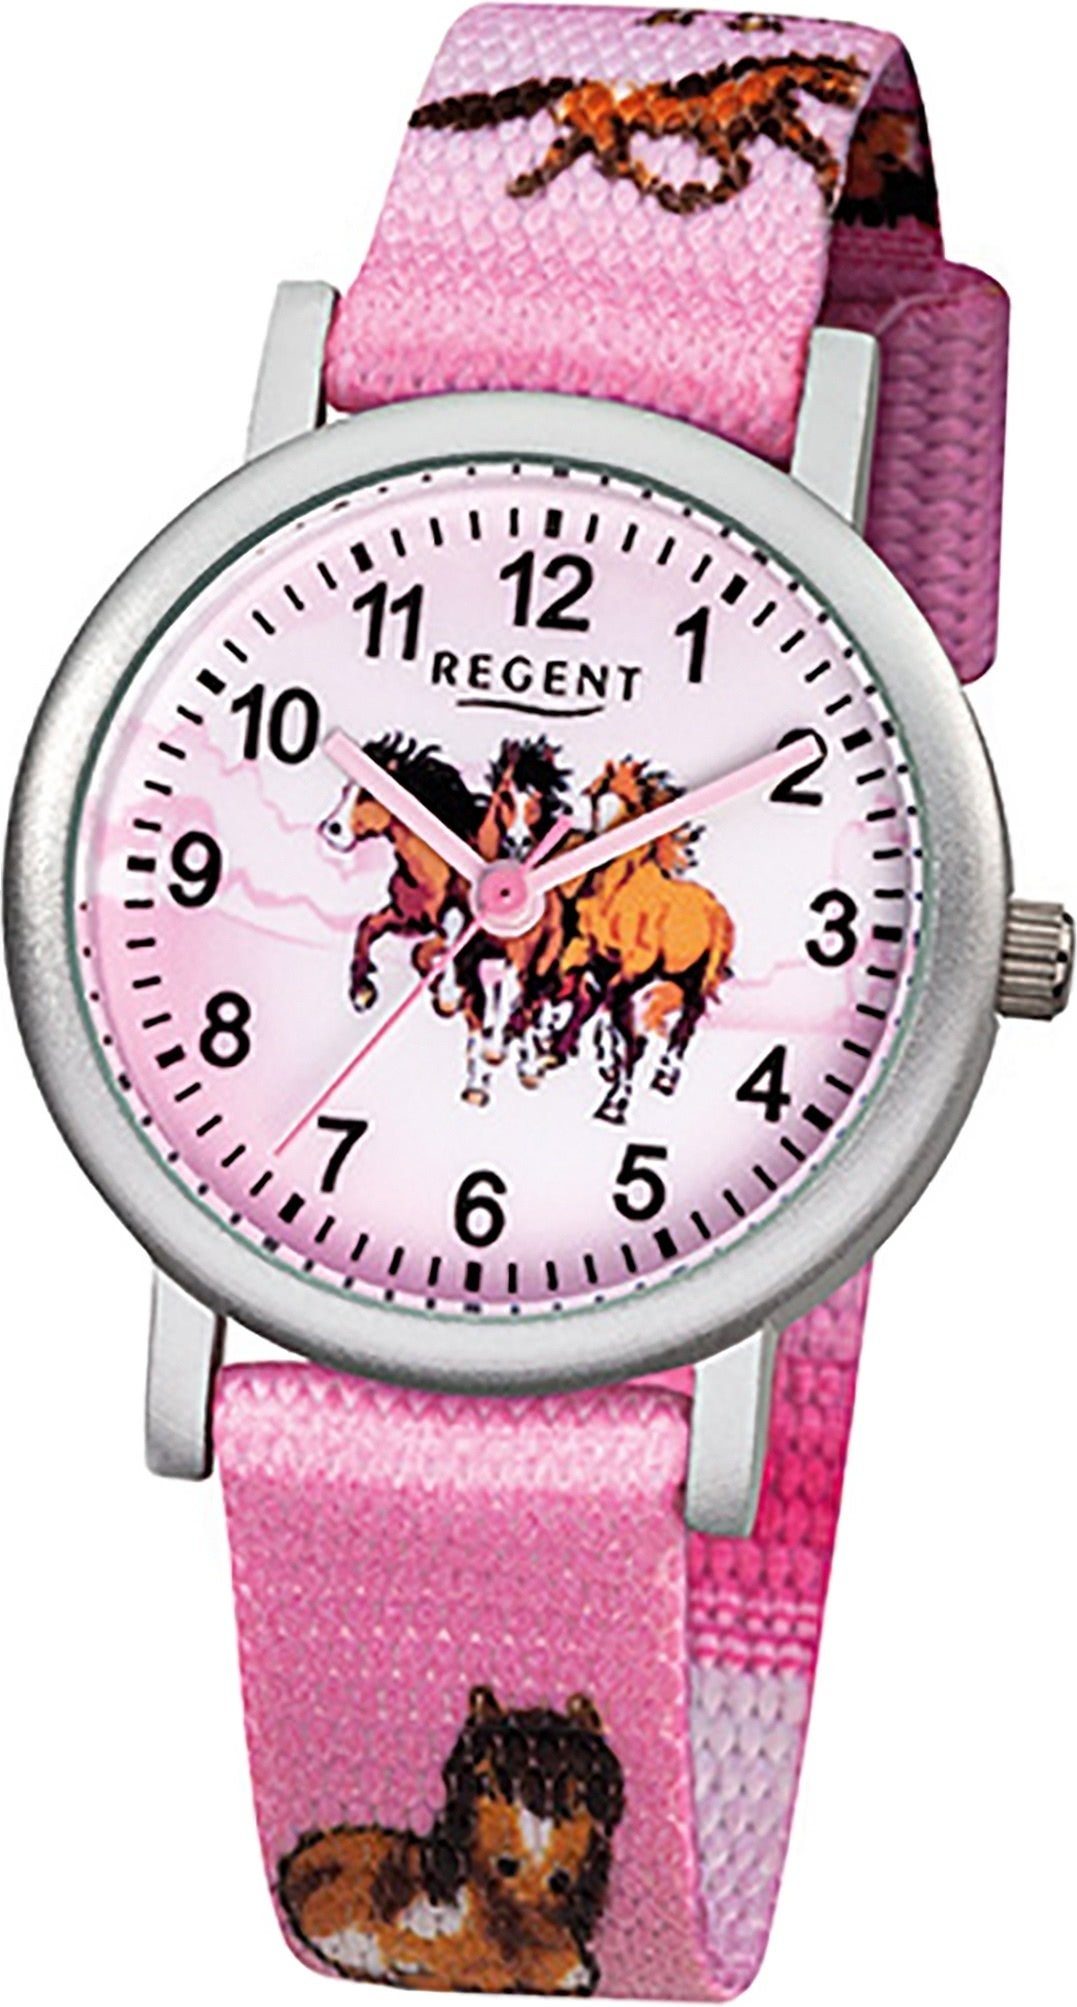 Regent Quarzuhr Regent Kinder Textil rosa, 29mm) Textilarmband Quarzuhr, Uhr F-729 Kinderuhr (ca. rundes Gehäuse, klein